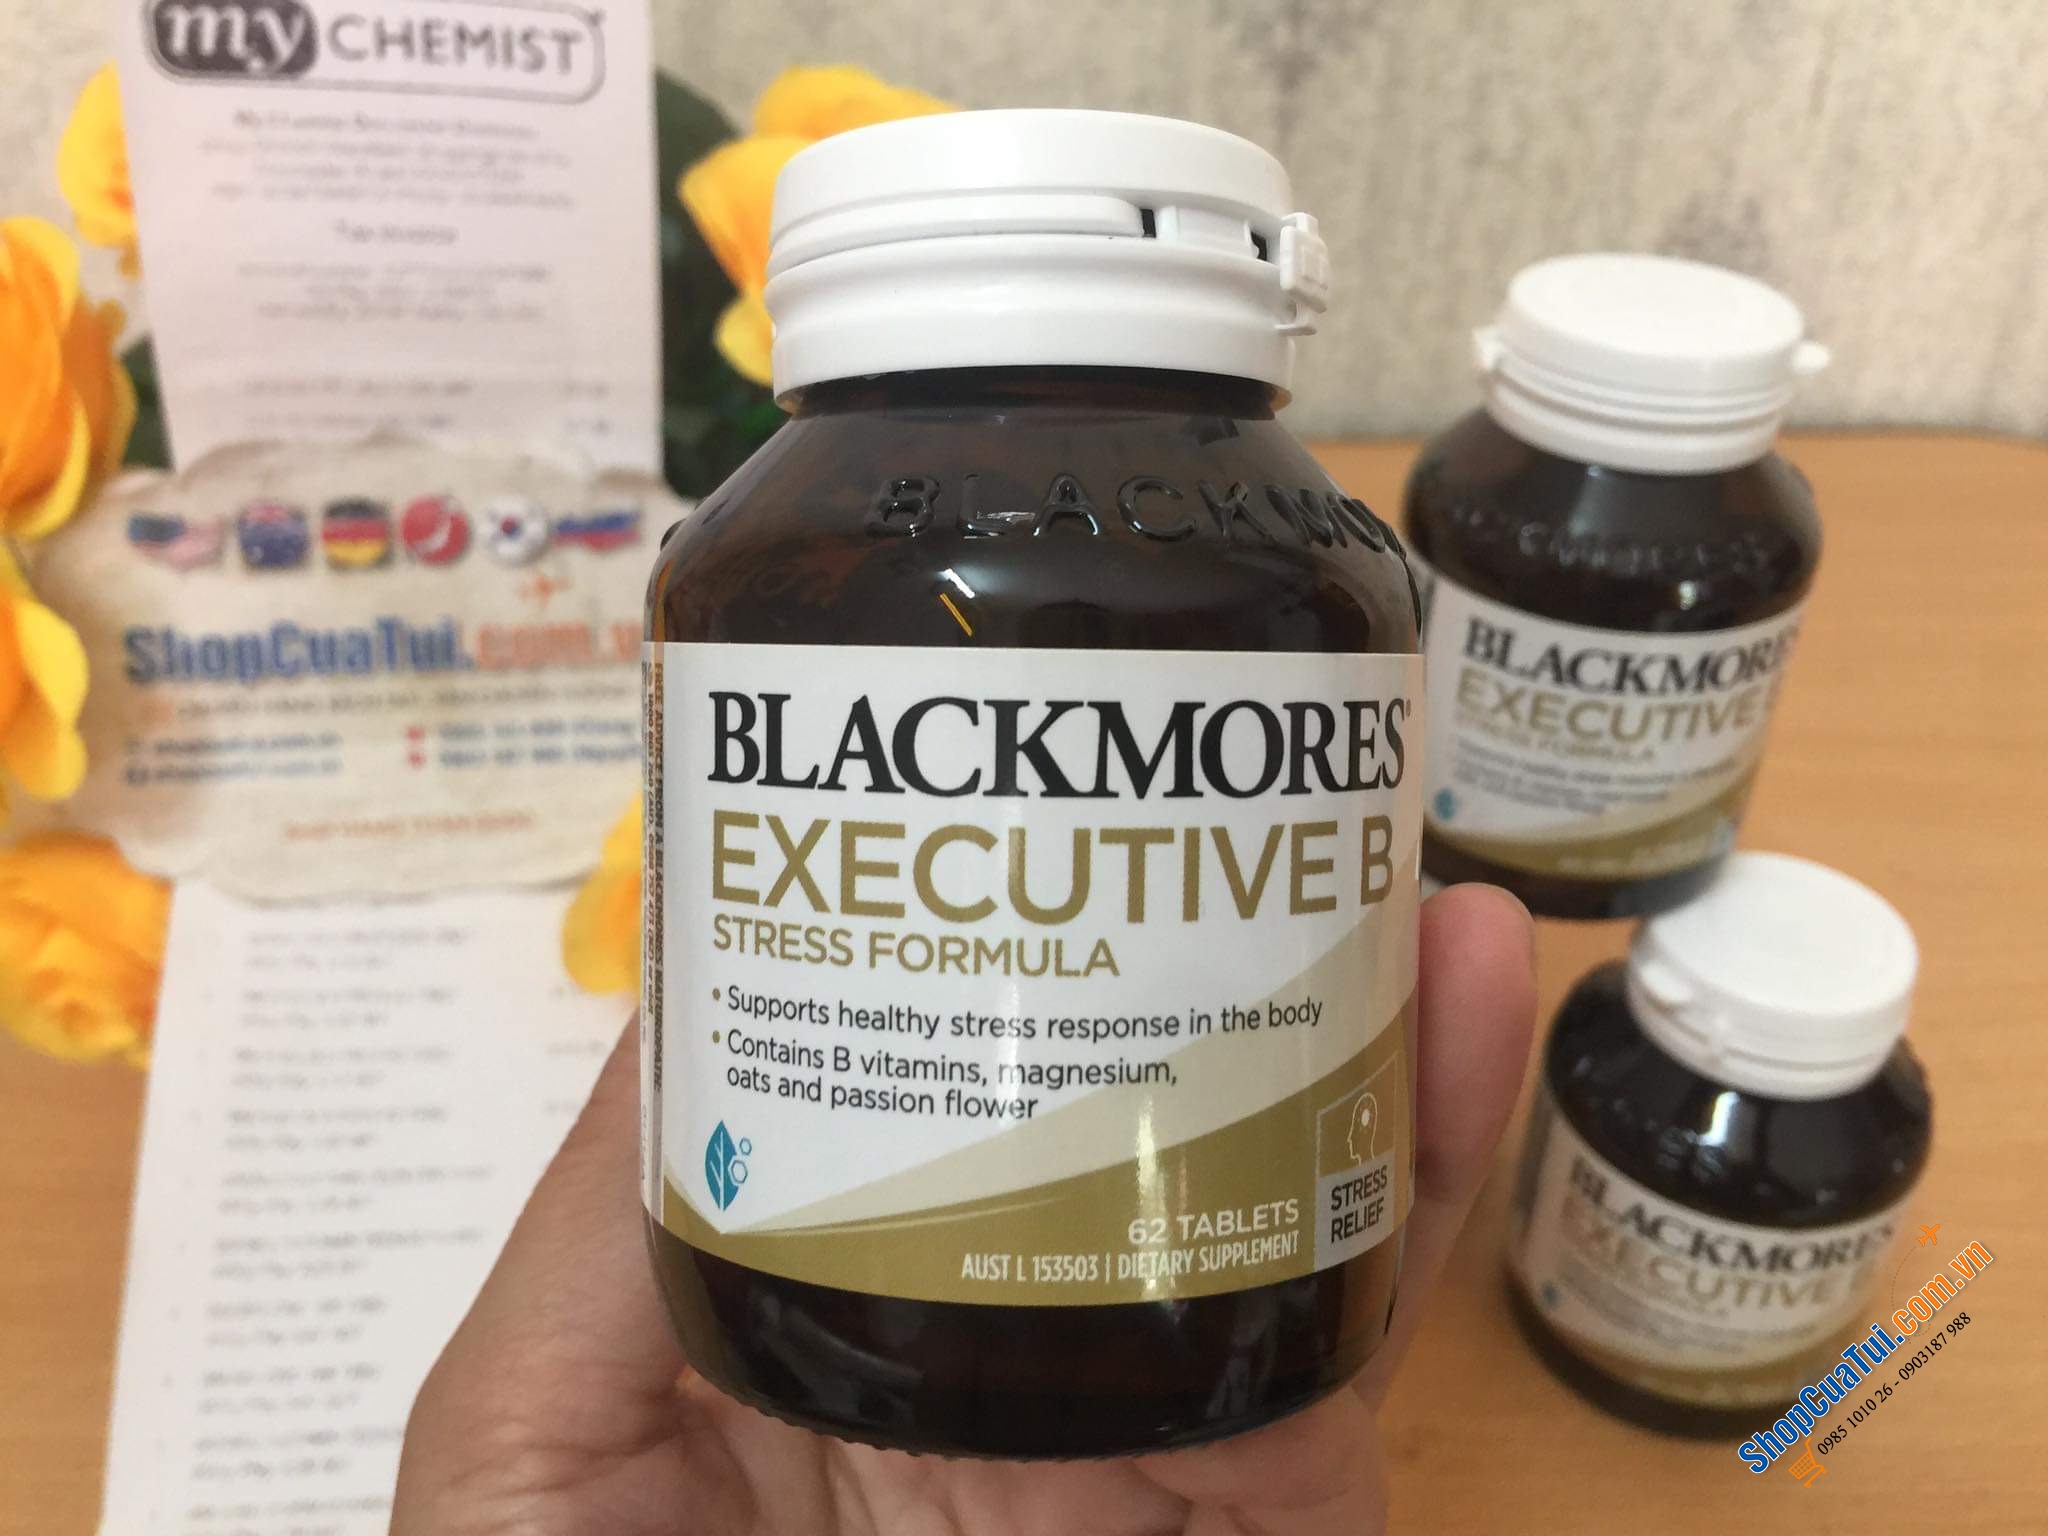 THUỐC GIẢM STRESS, CĂNG THẲNG Blackmores Executive B Stress Formula 62 Tablets